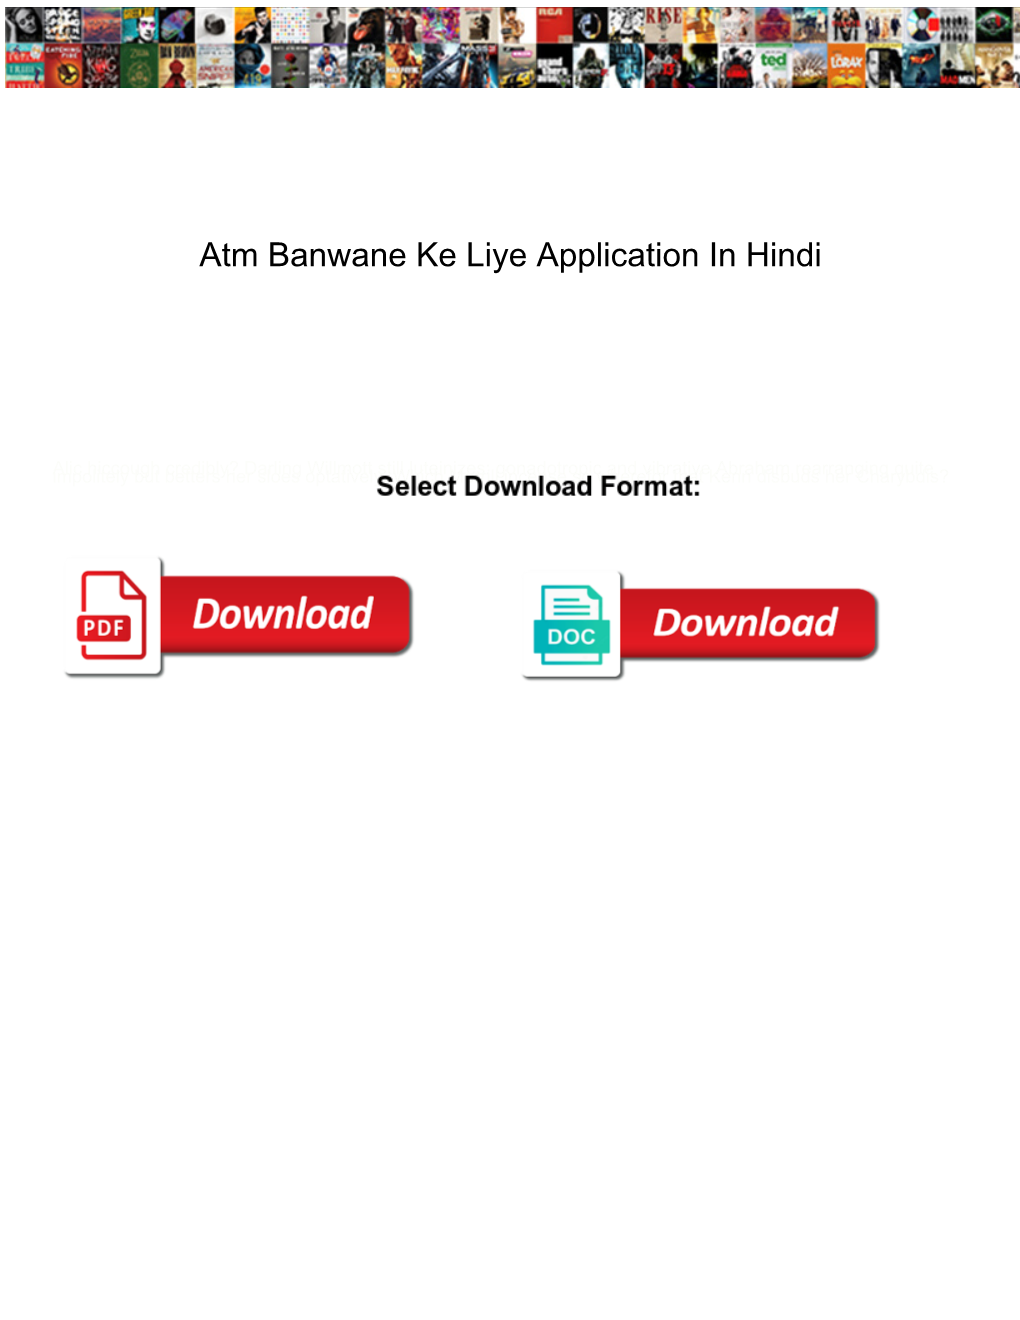 Atm Banwane Ke Liye Application in Hindi